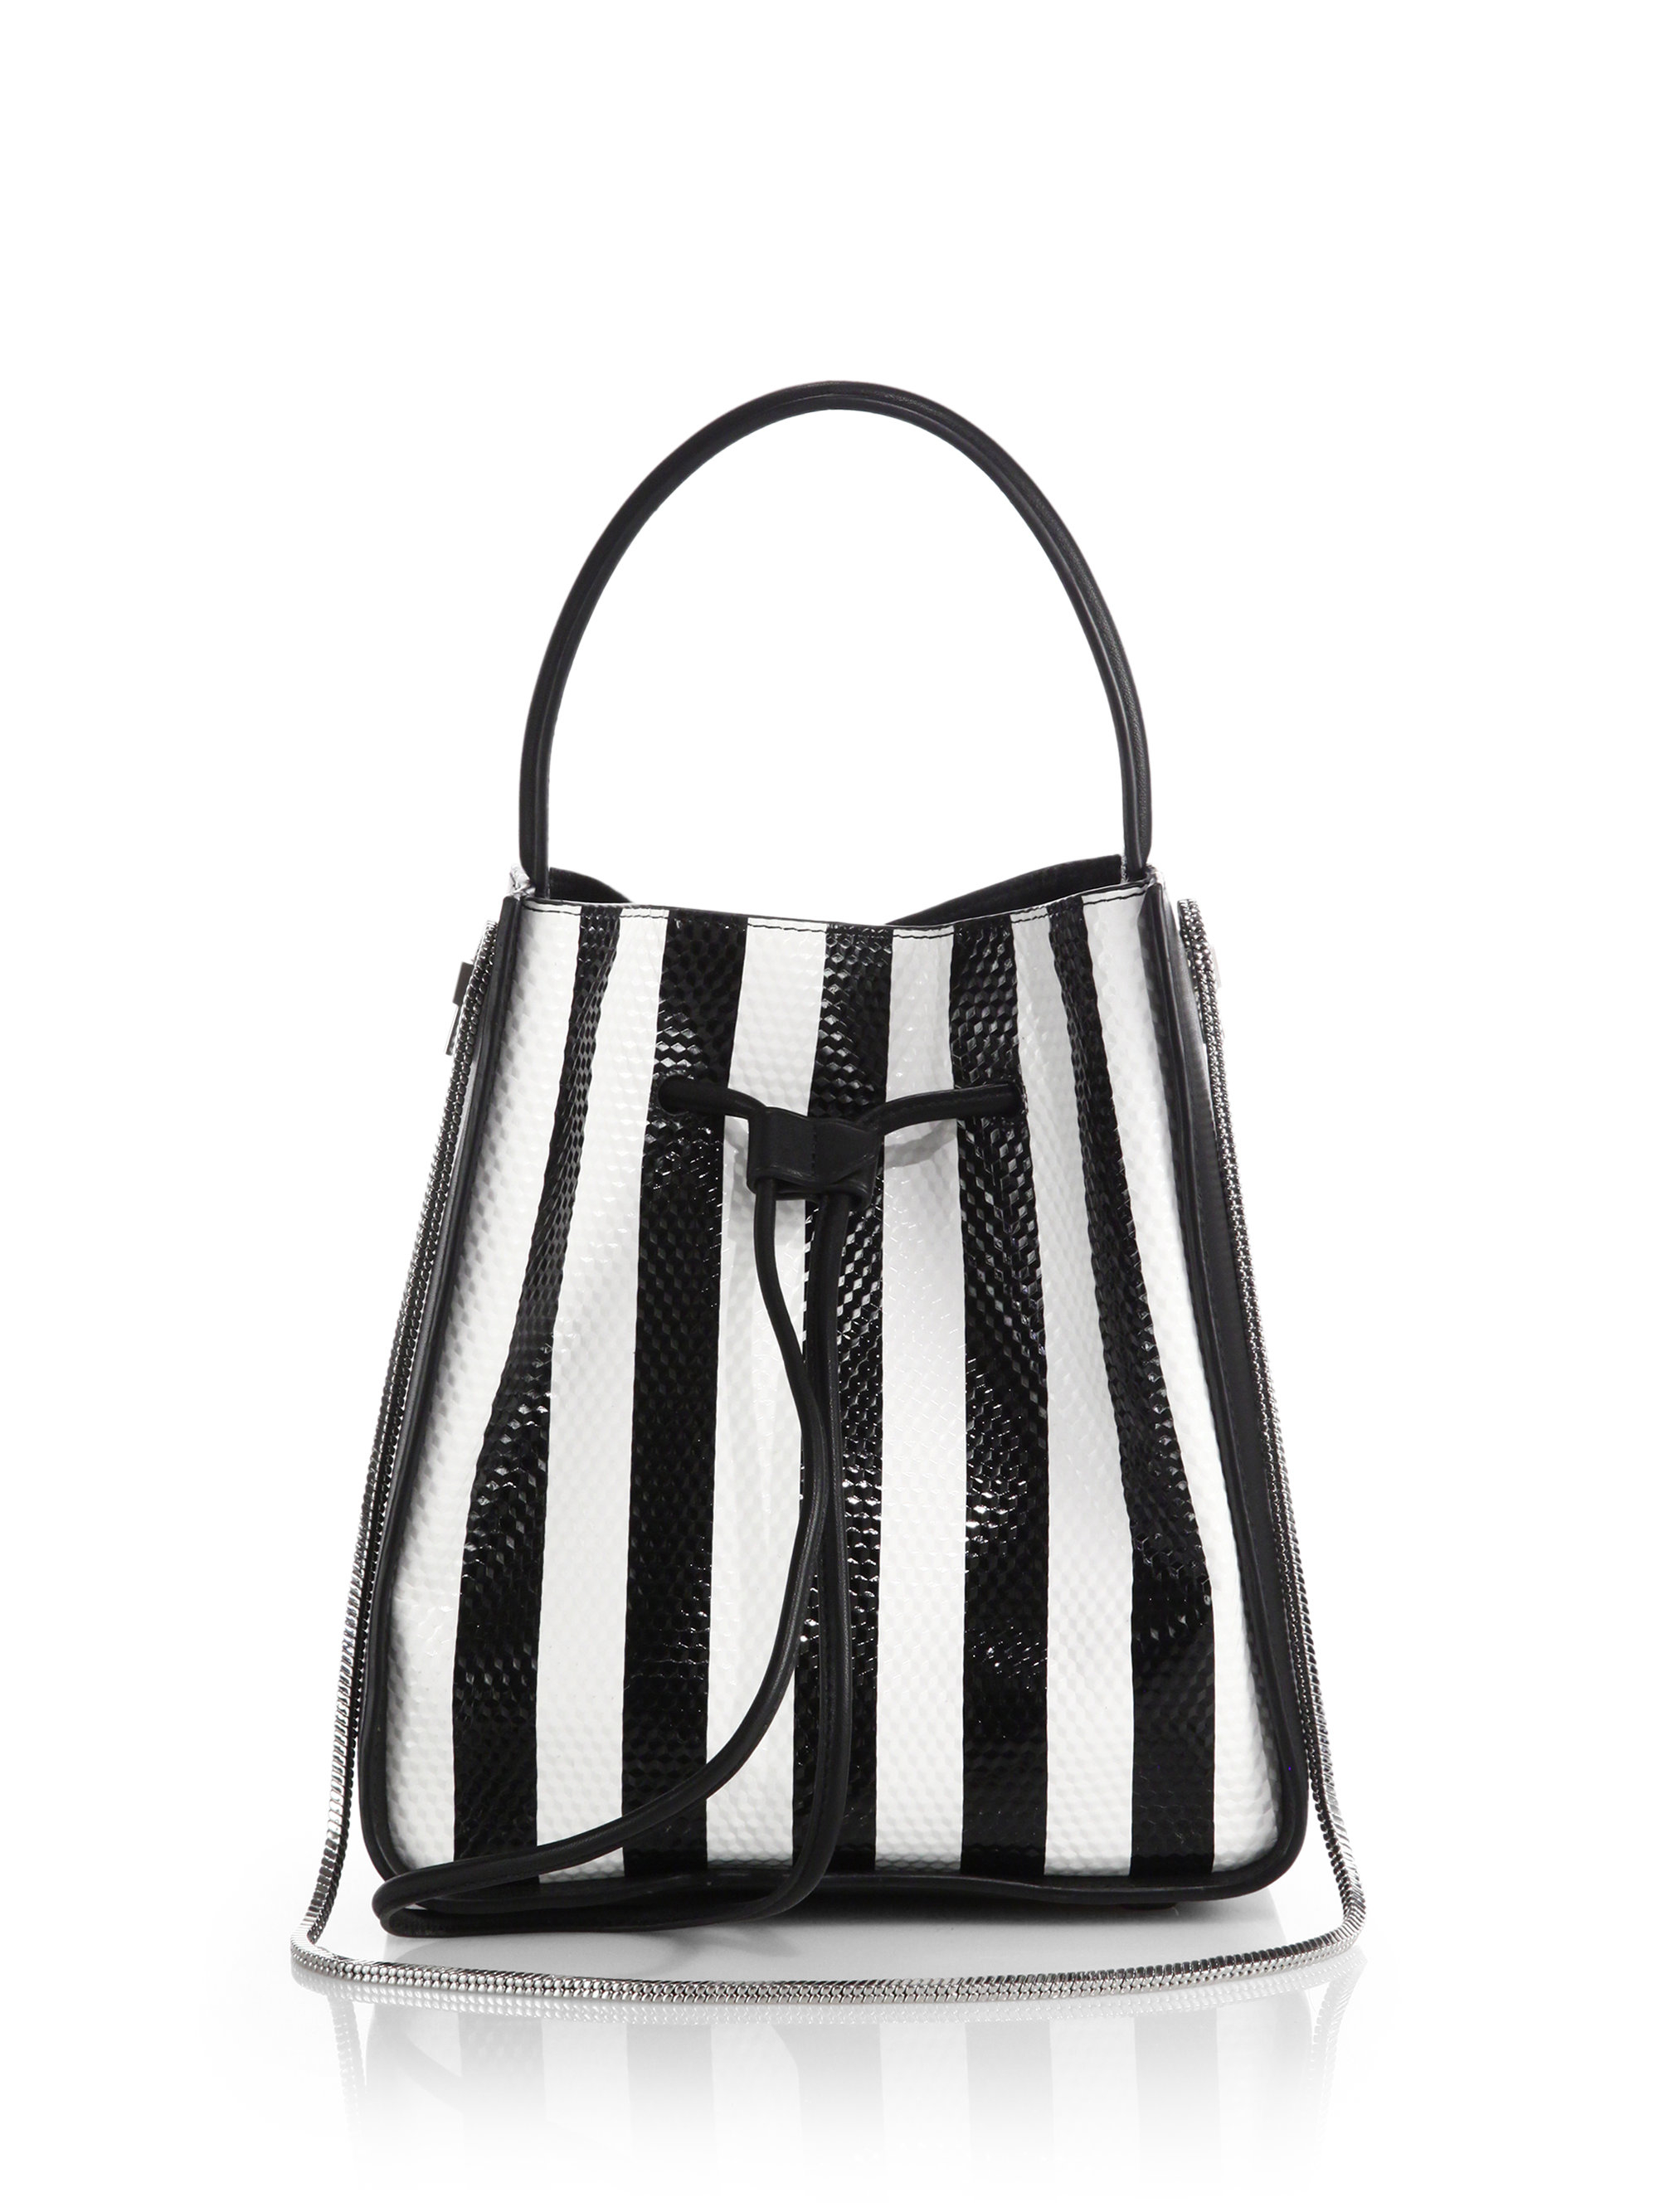 3.1 Phillip Lim Soleil Small Striped 3D-Textured Leather Shoulder Bag in Black-White (Black) - Lyst